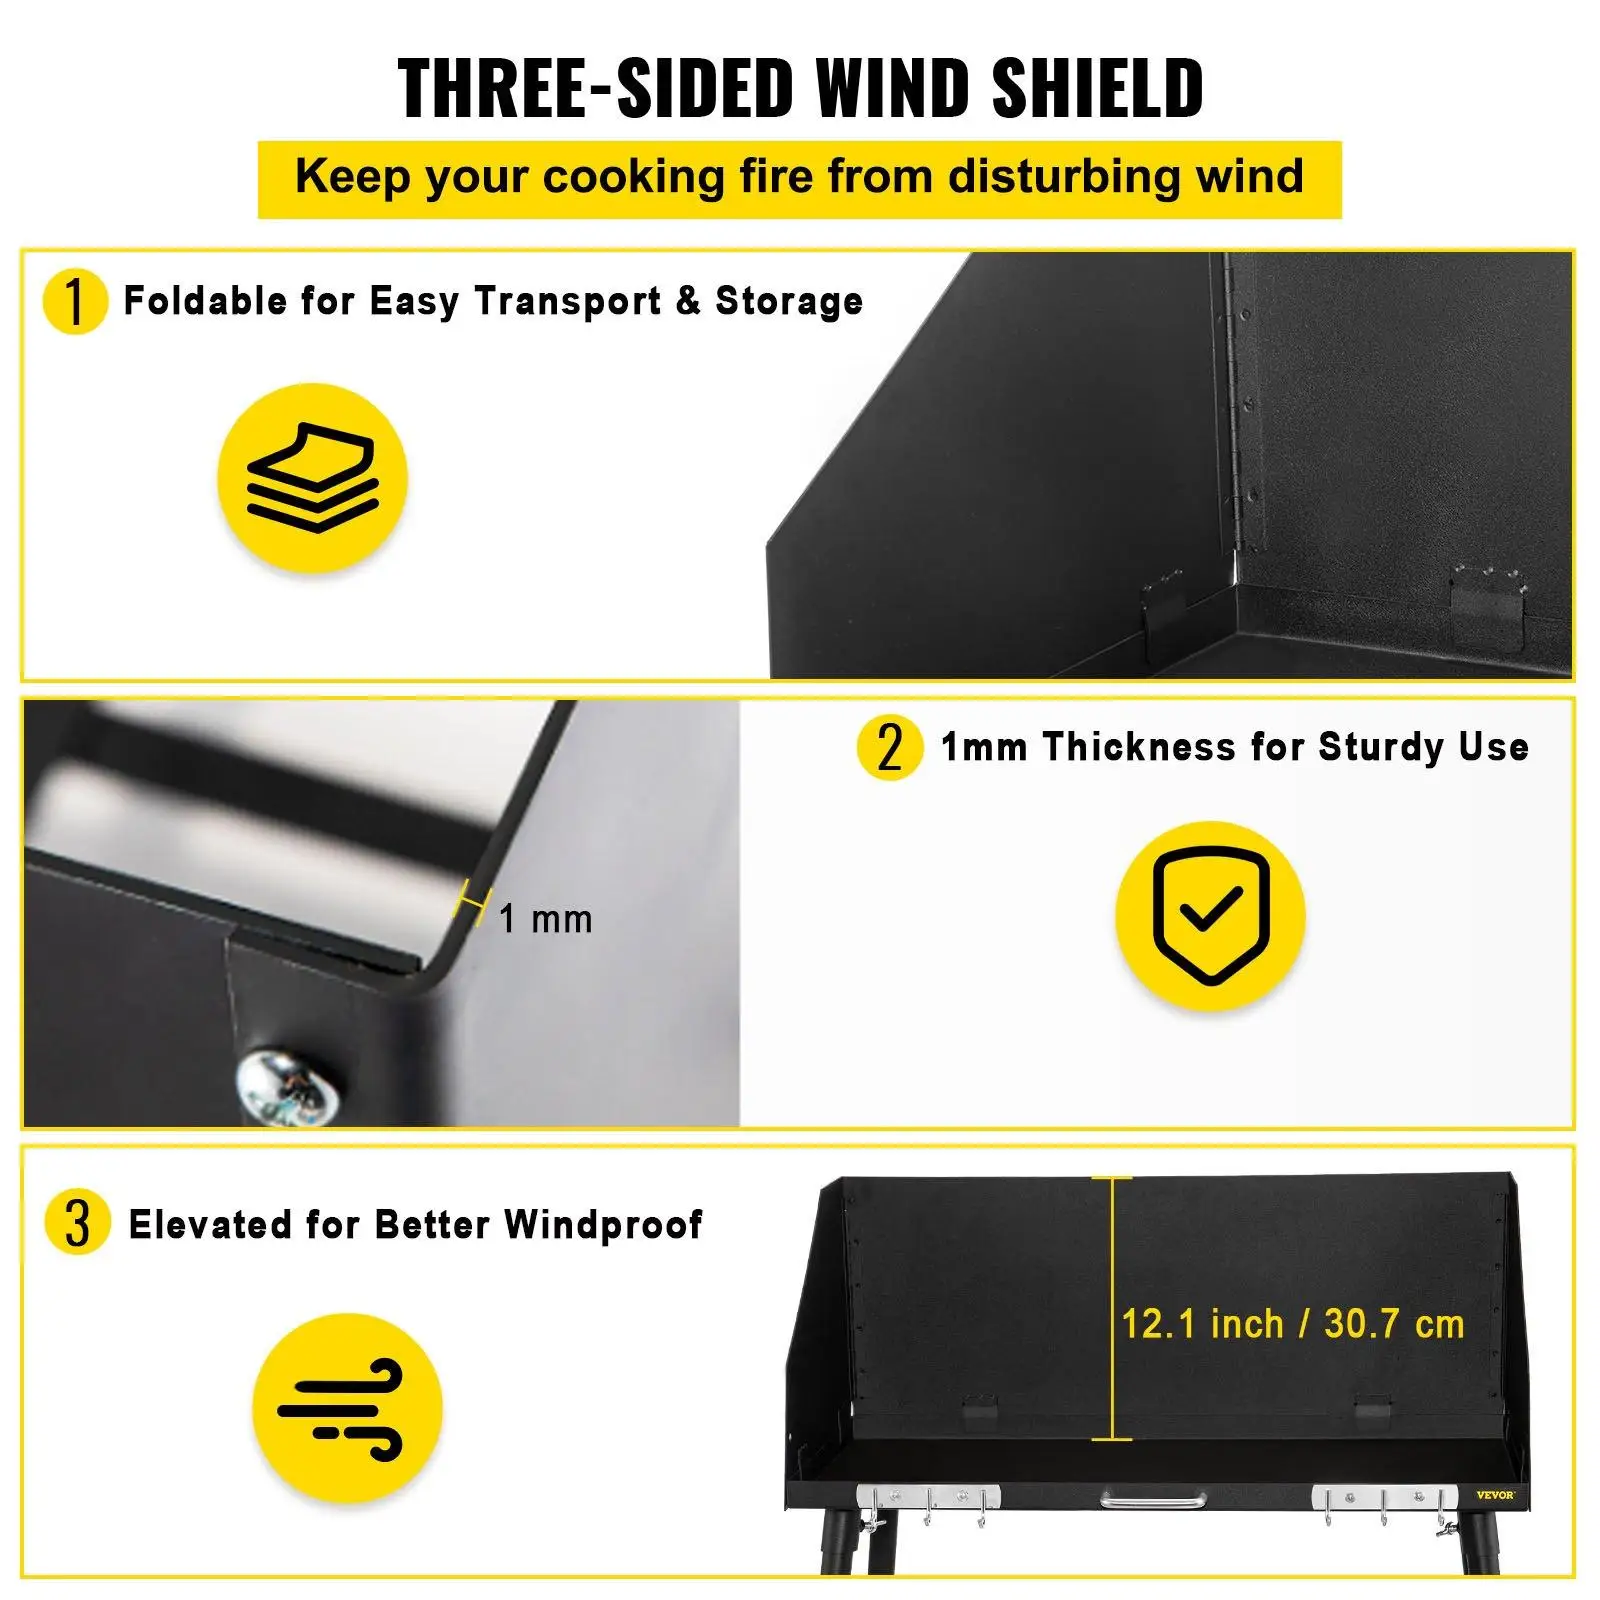 three-sided wind shield